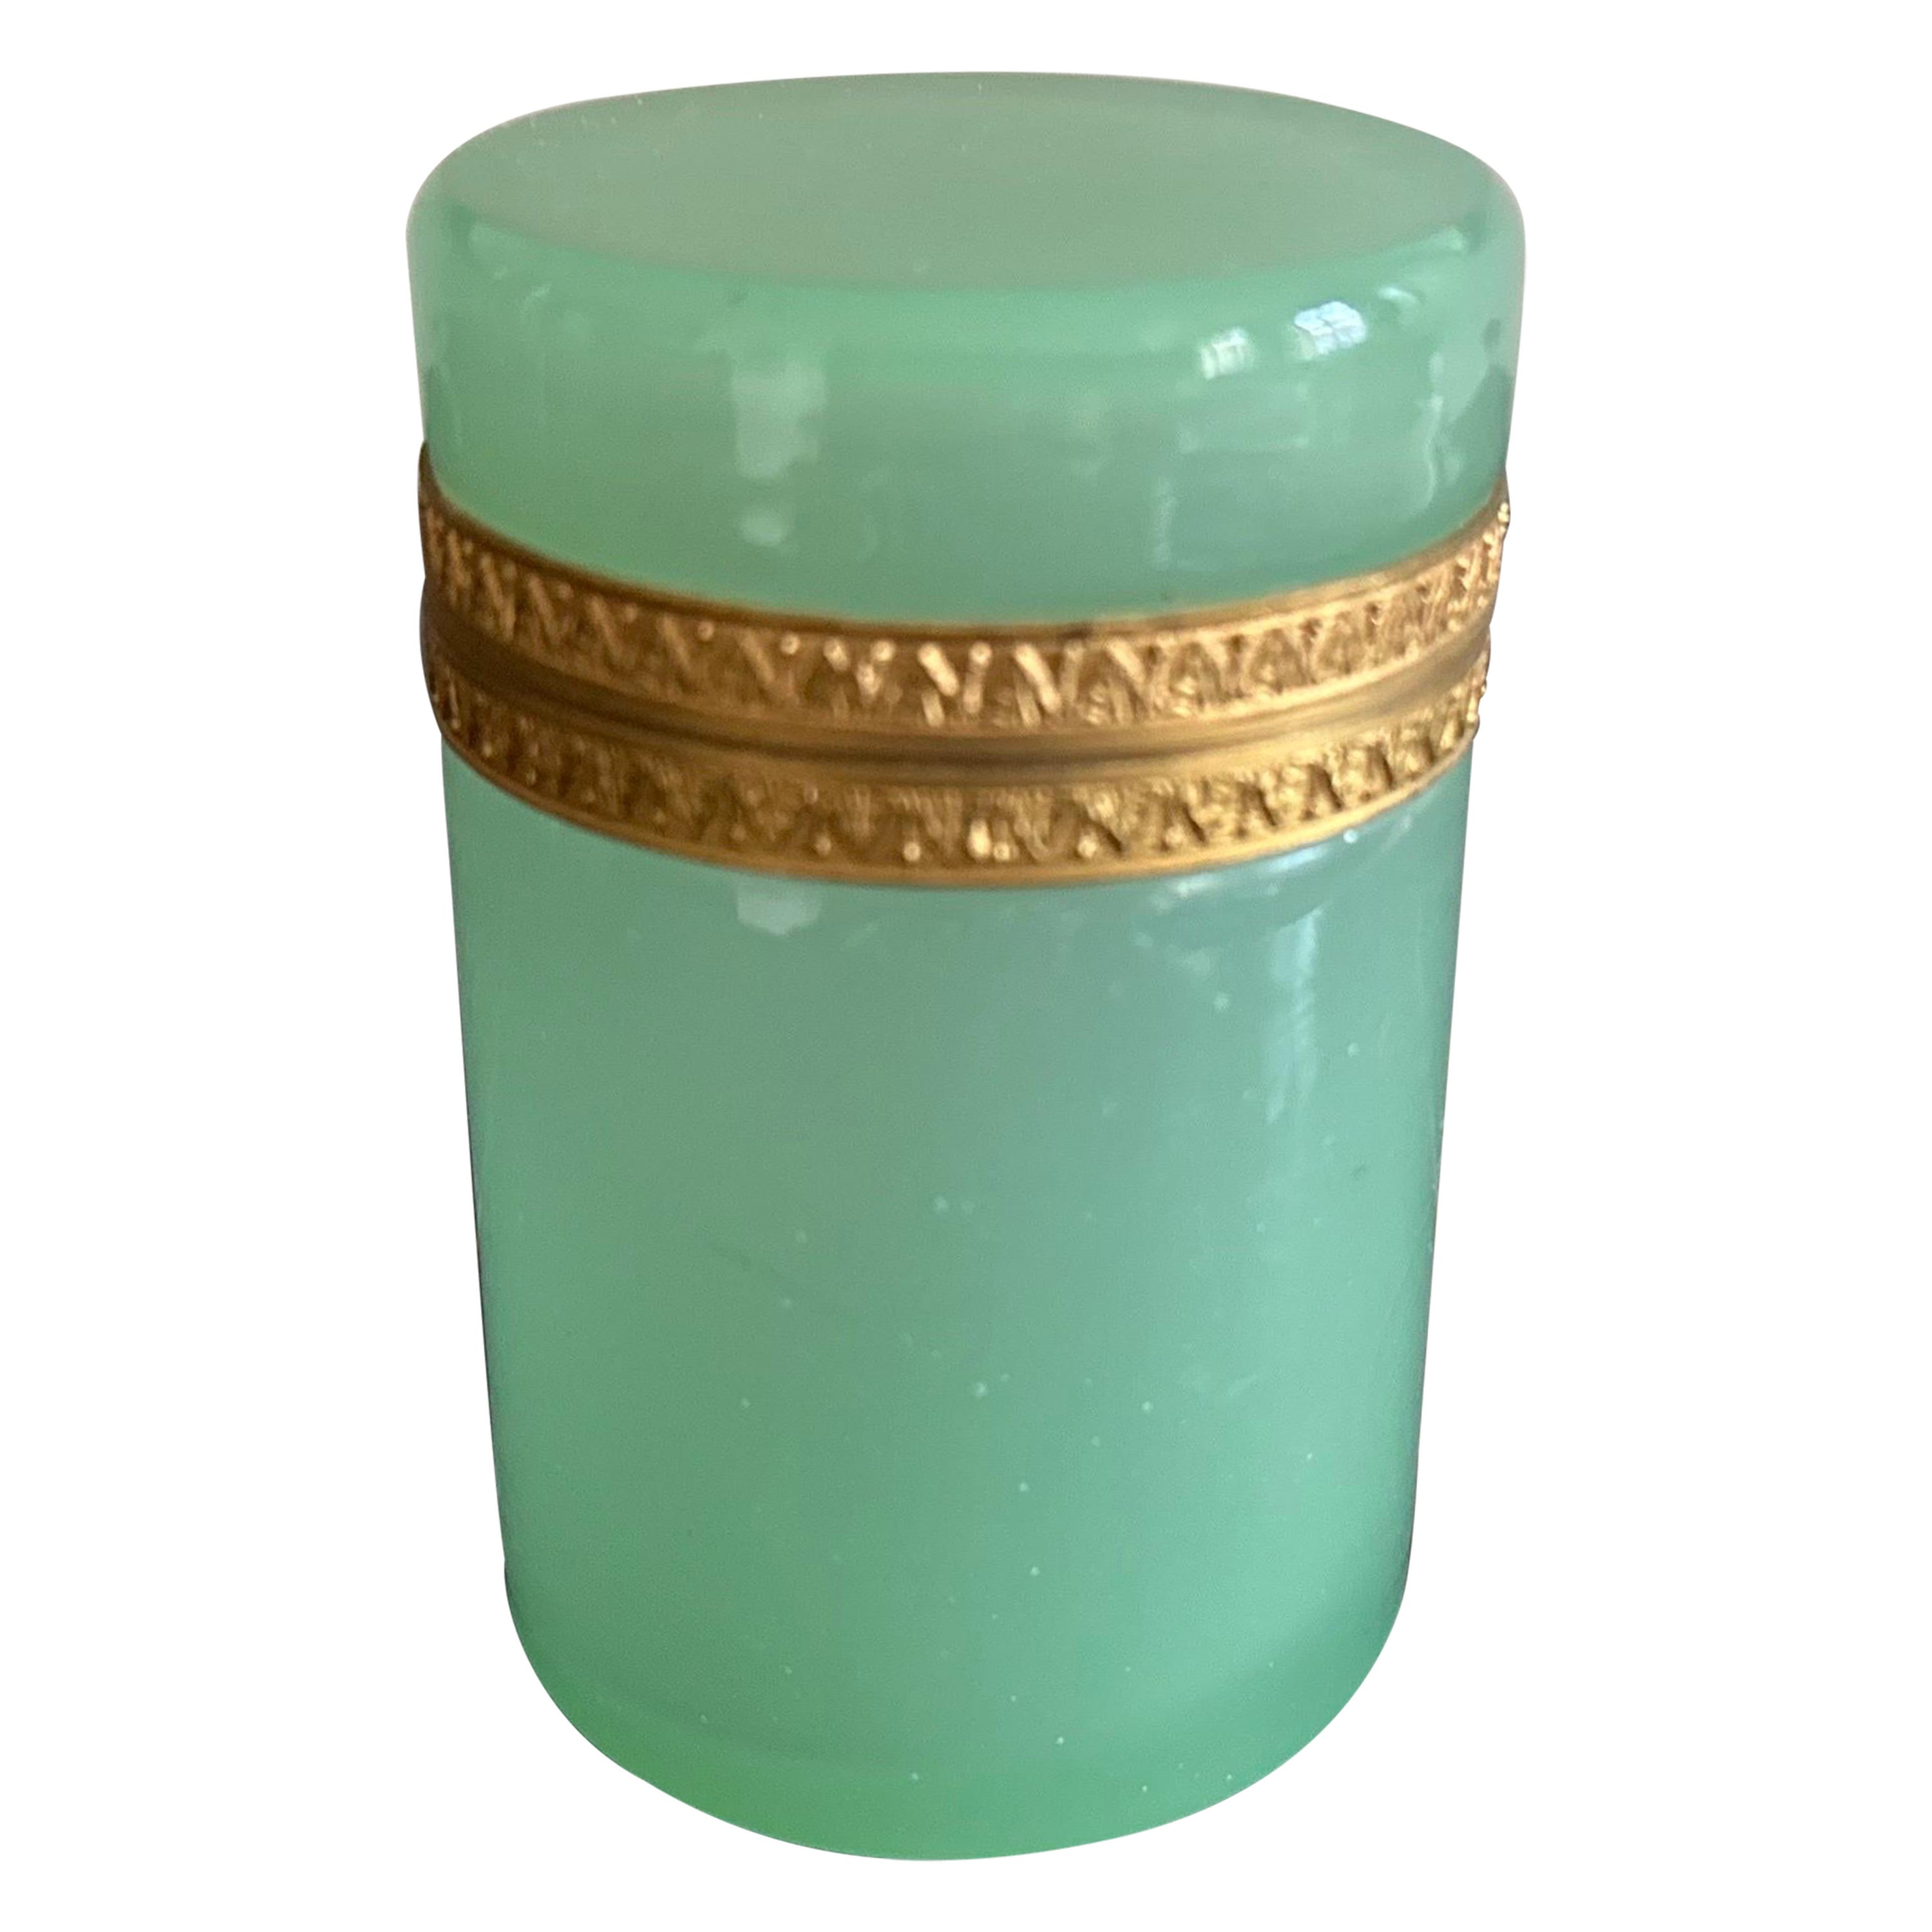  CENEDESE Glass Murano Jewelry Box - Jade Green, Early 20th Century Italy